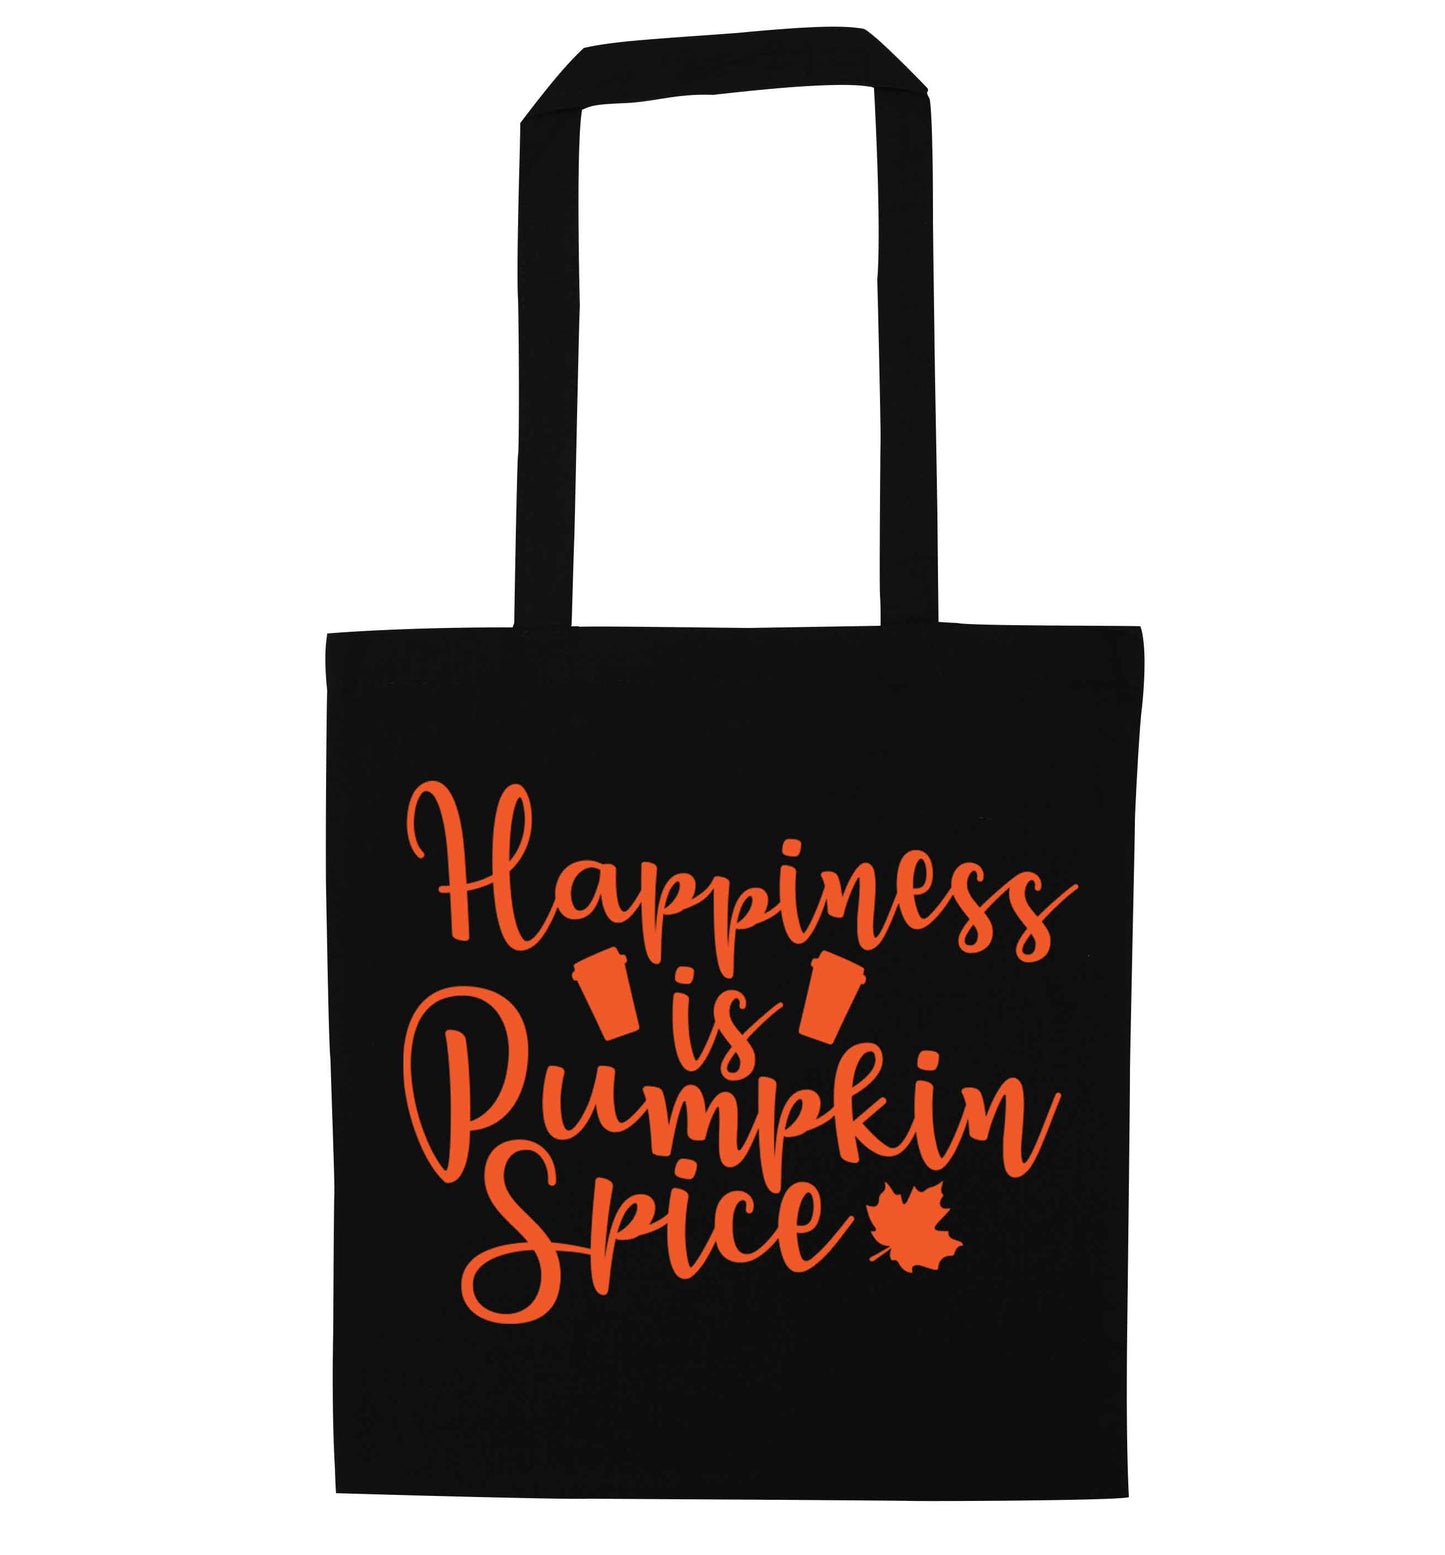 Happiness Pumpkin Spice black tote bag